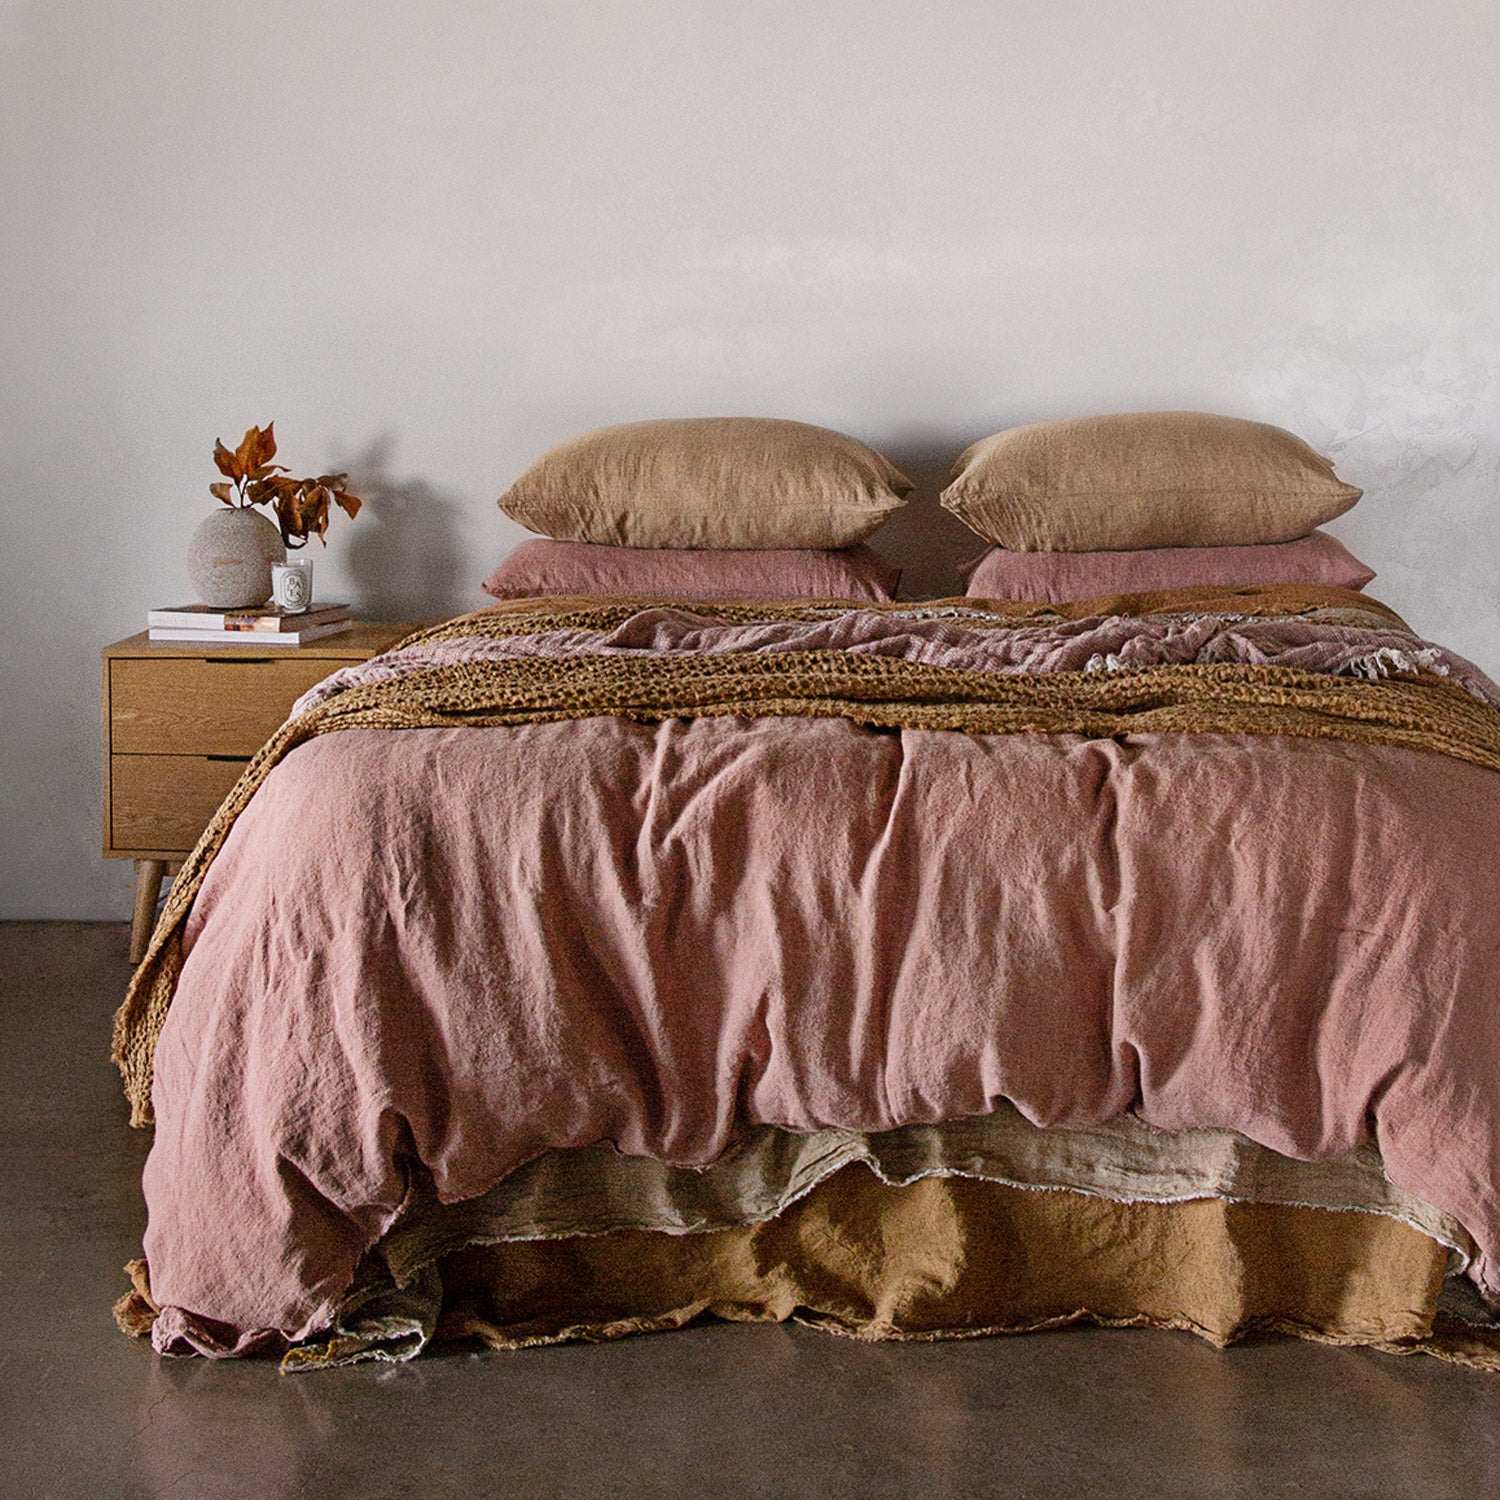 Basix Linen Pillowcase | Caramel Tone | Hale Mercantile Co.